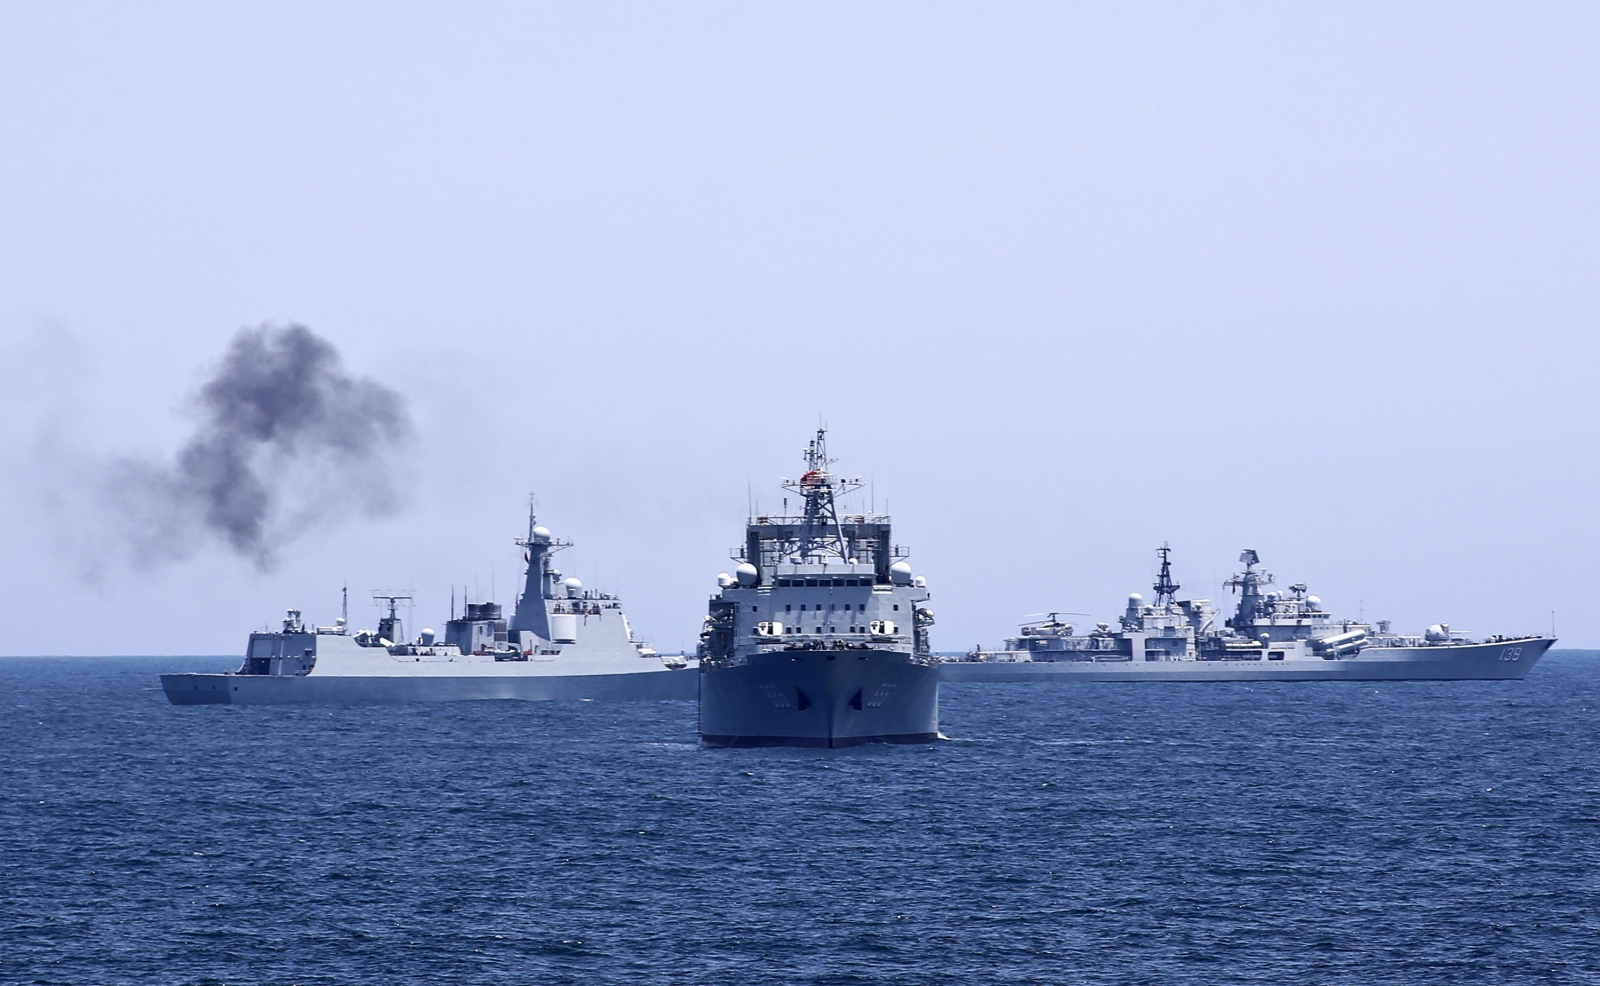 http://d.ibtimes.co.uk/en/full/1400242/iran-china-joint-naval-drill.jpg